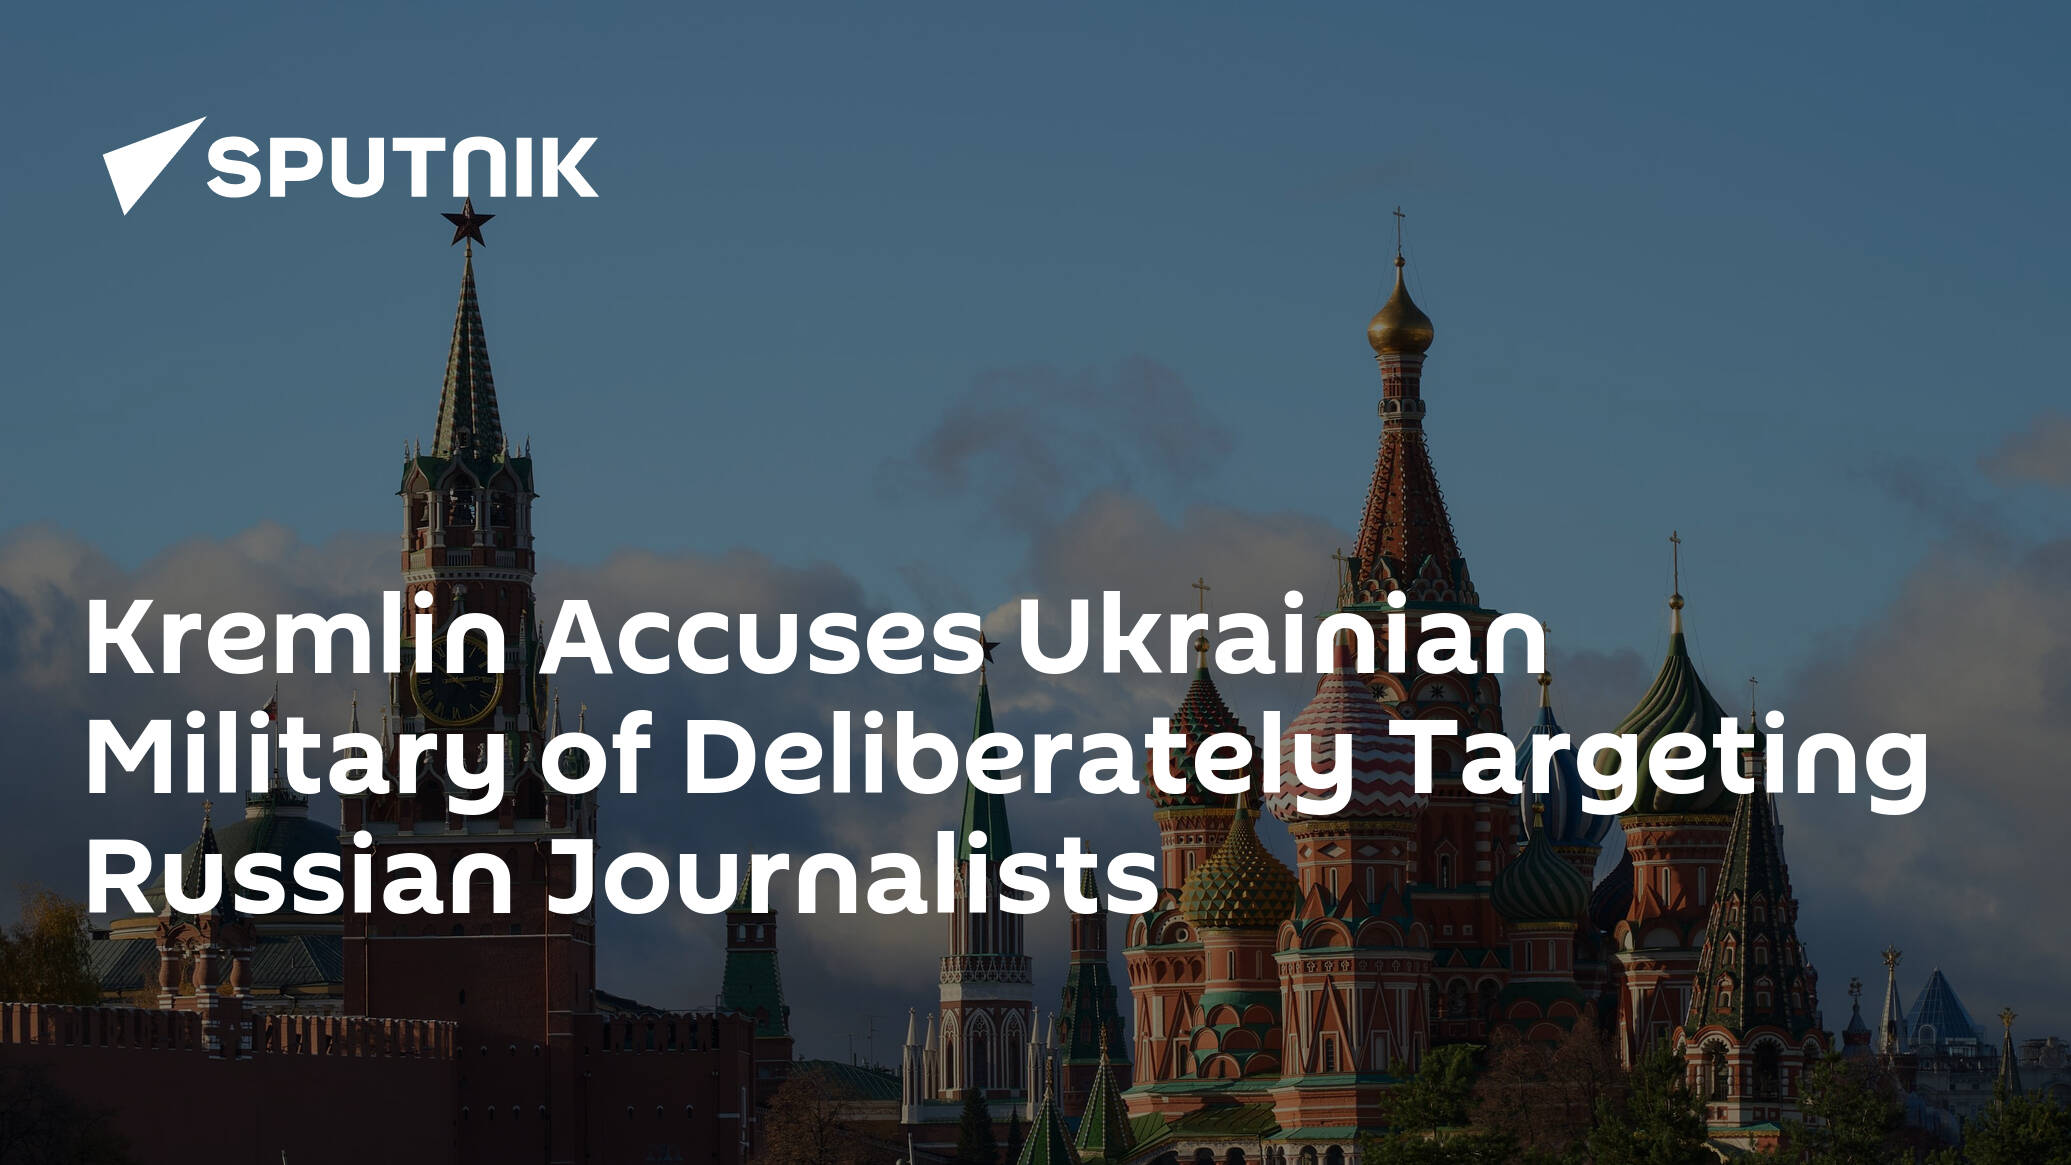 Kremlin Accuses Ukrainian Military of Deliberately Targeting Russian Journalists